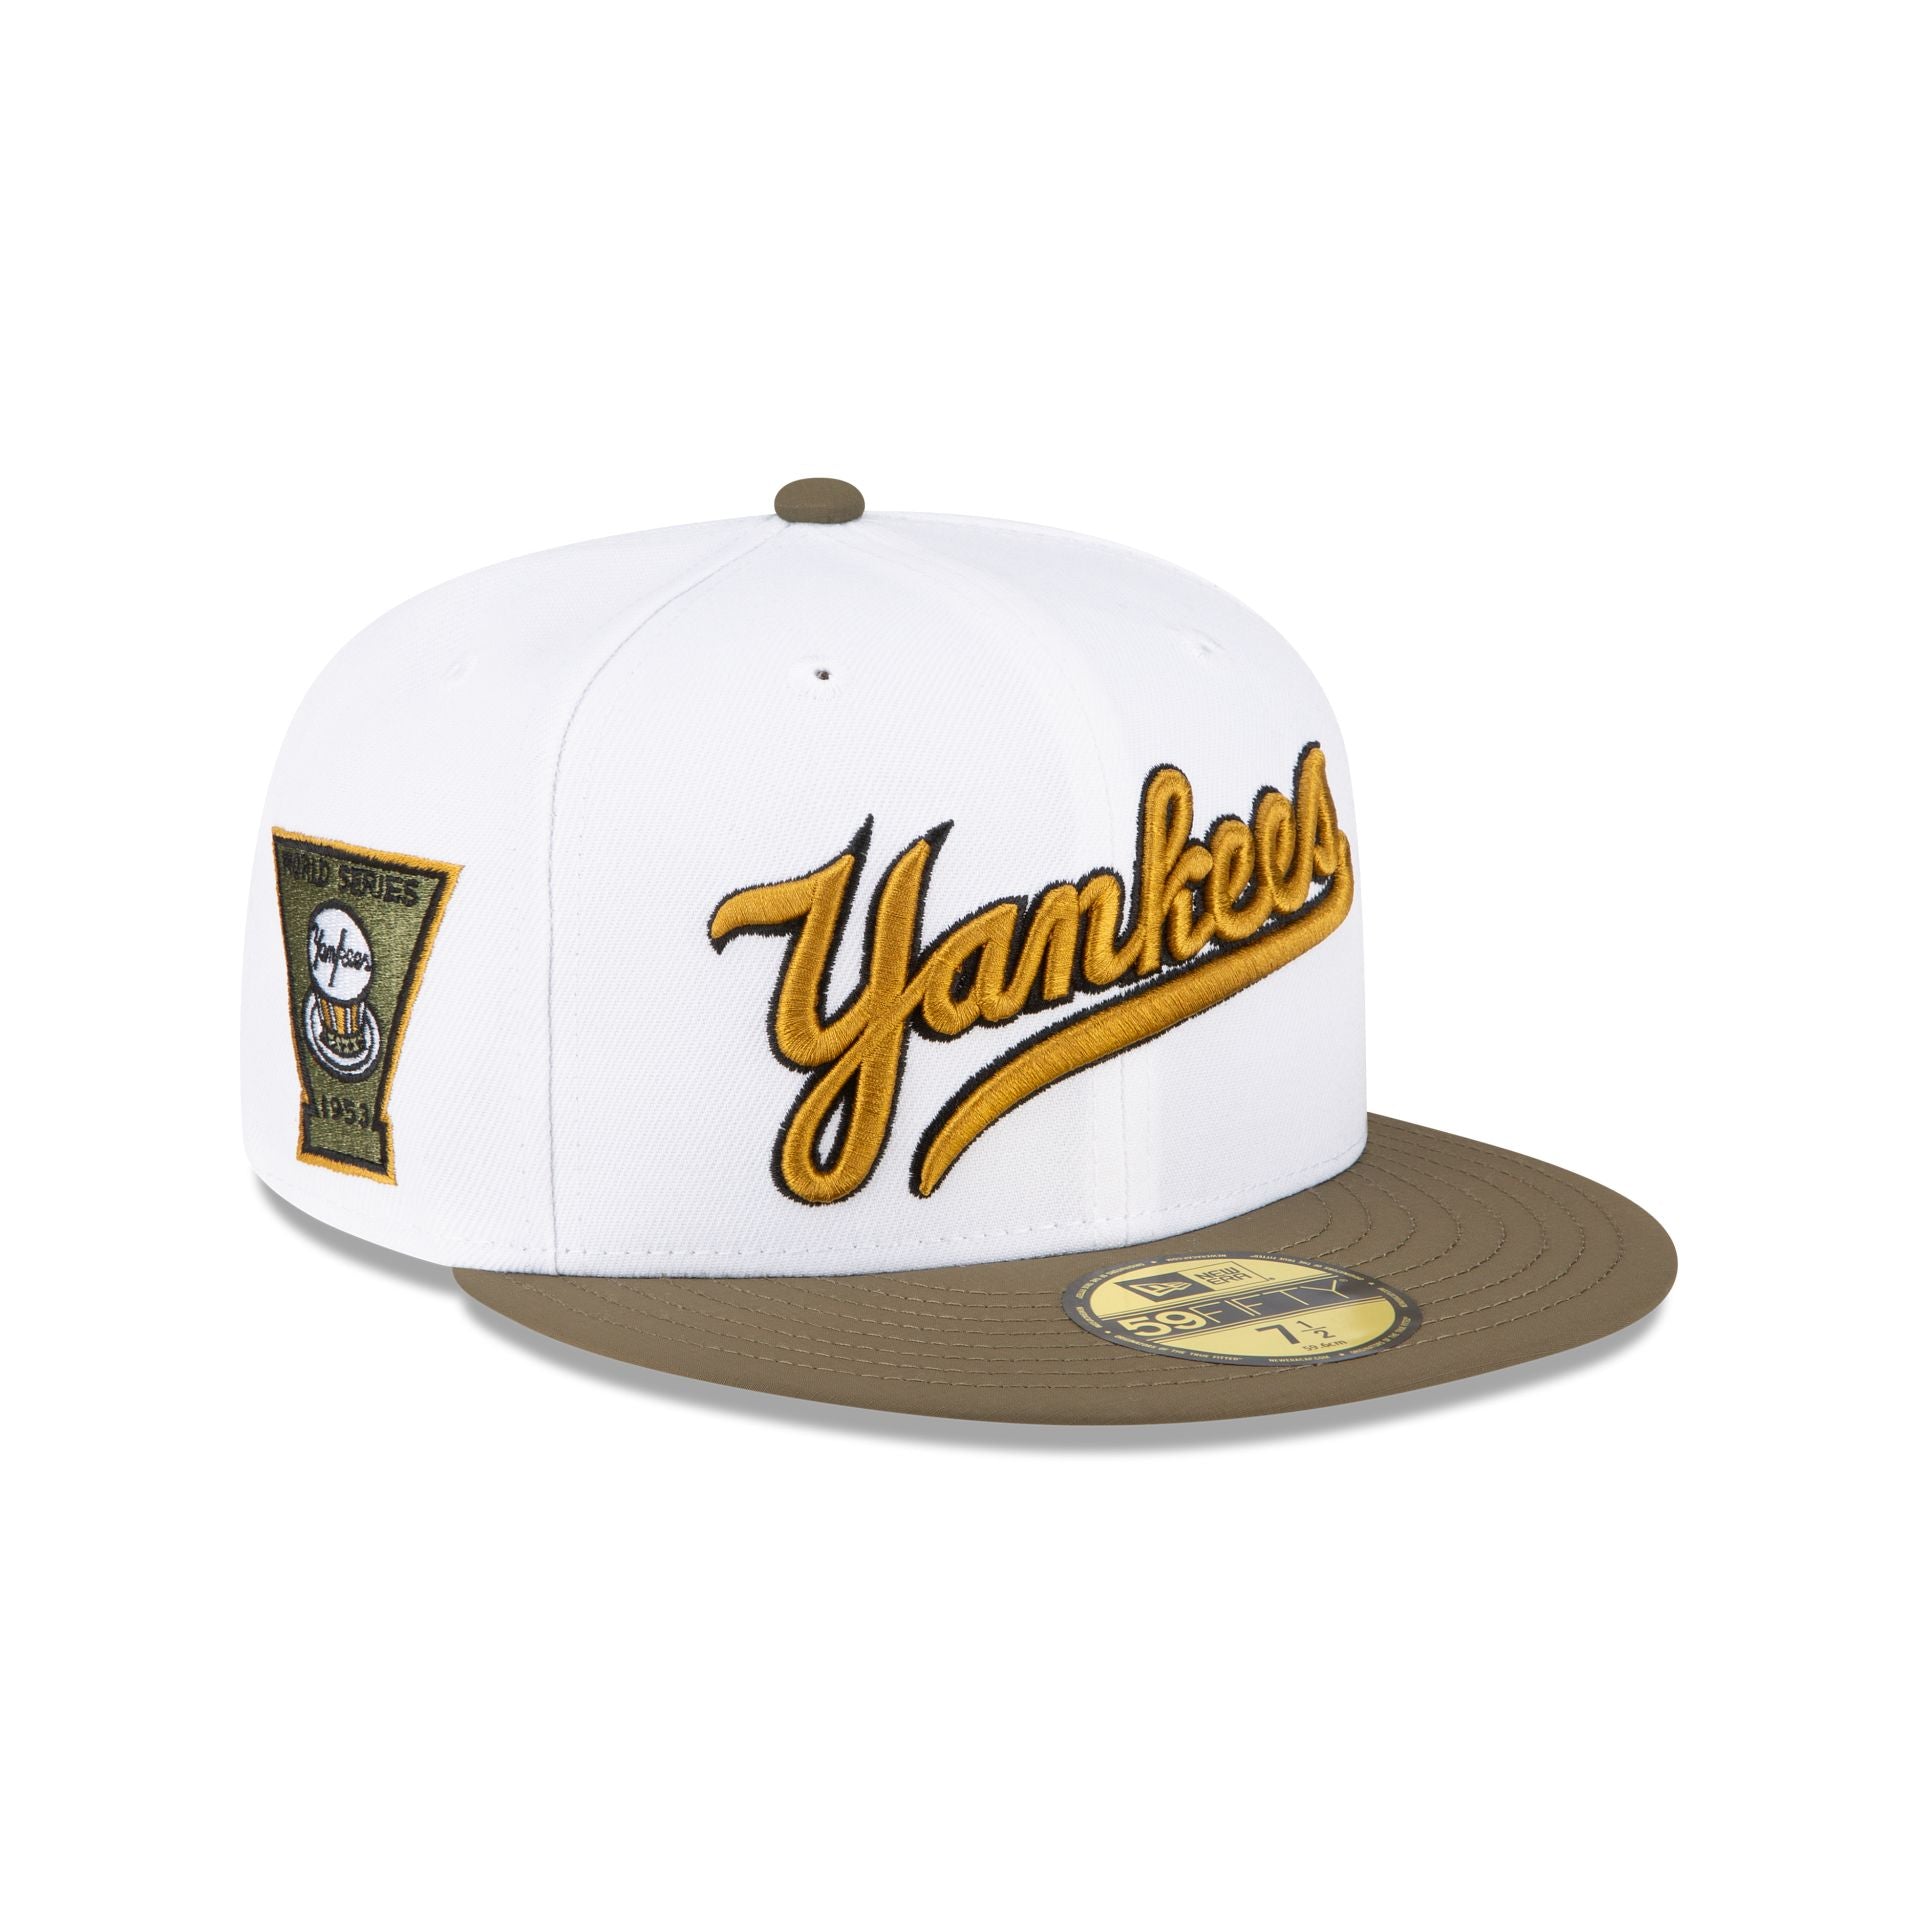 York New Cap Hats Era Caps – New & Yankees